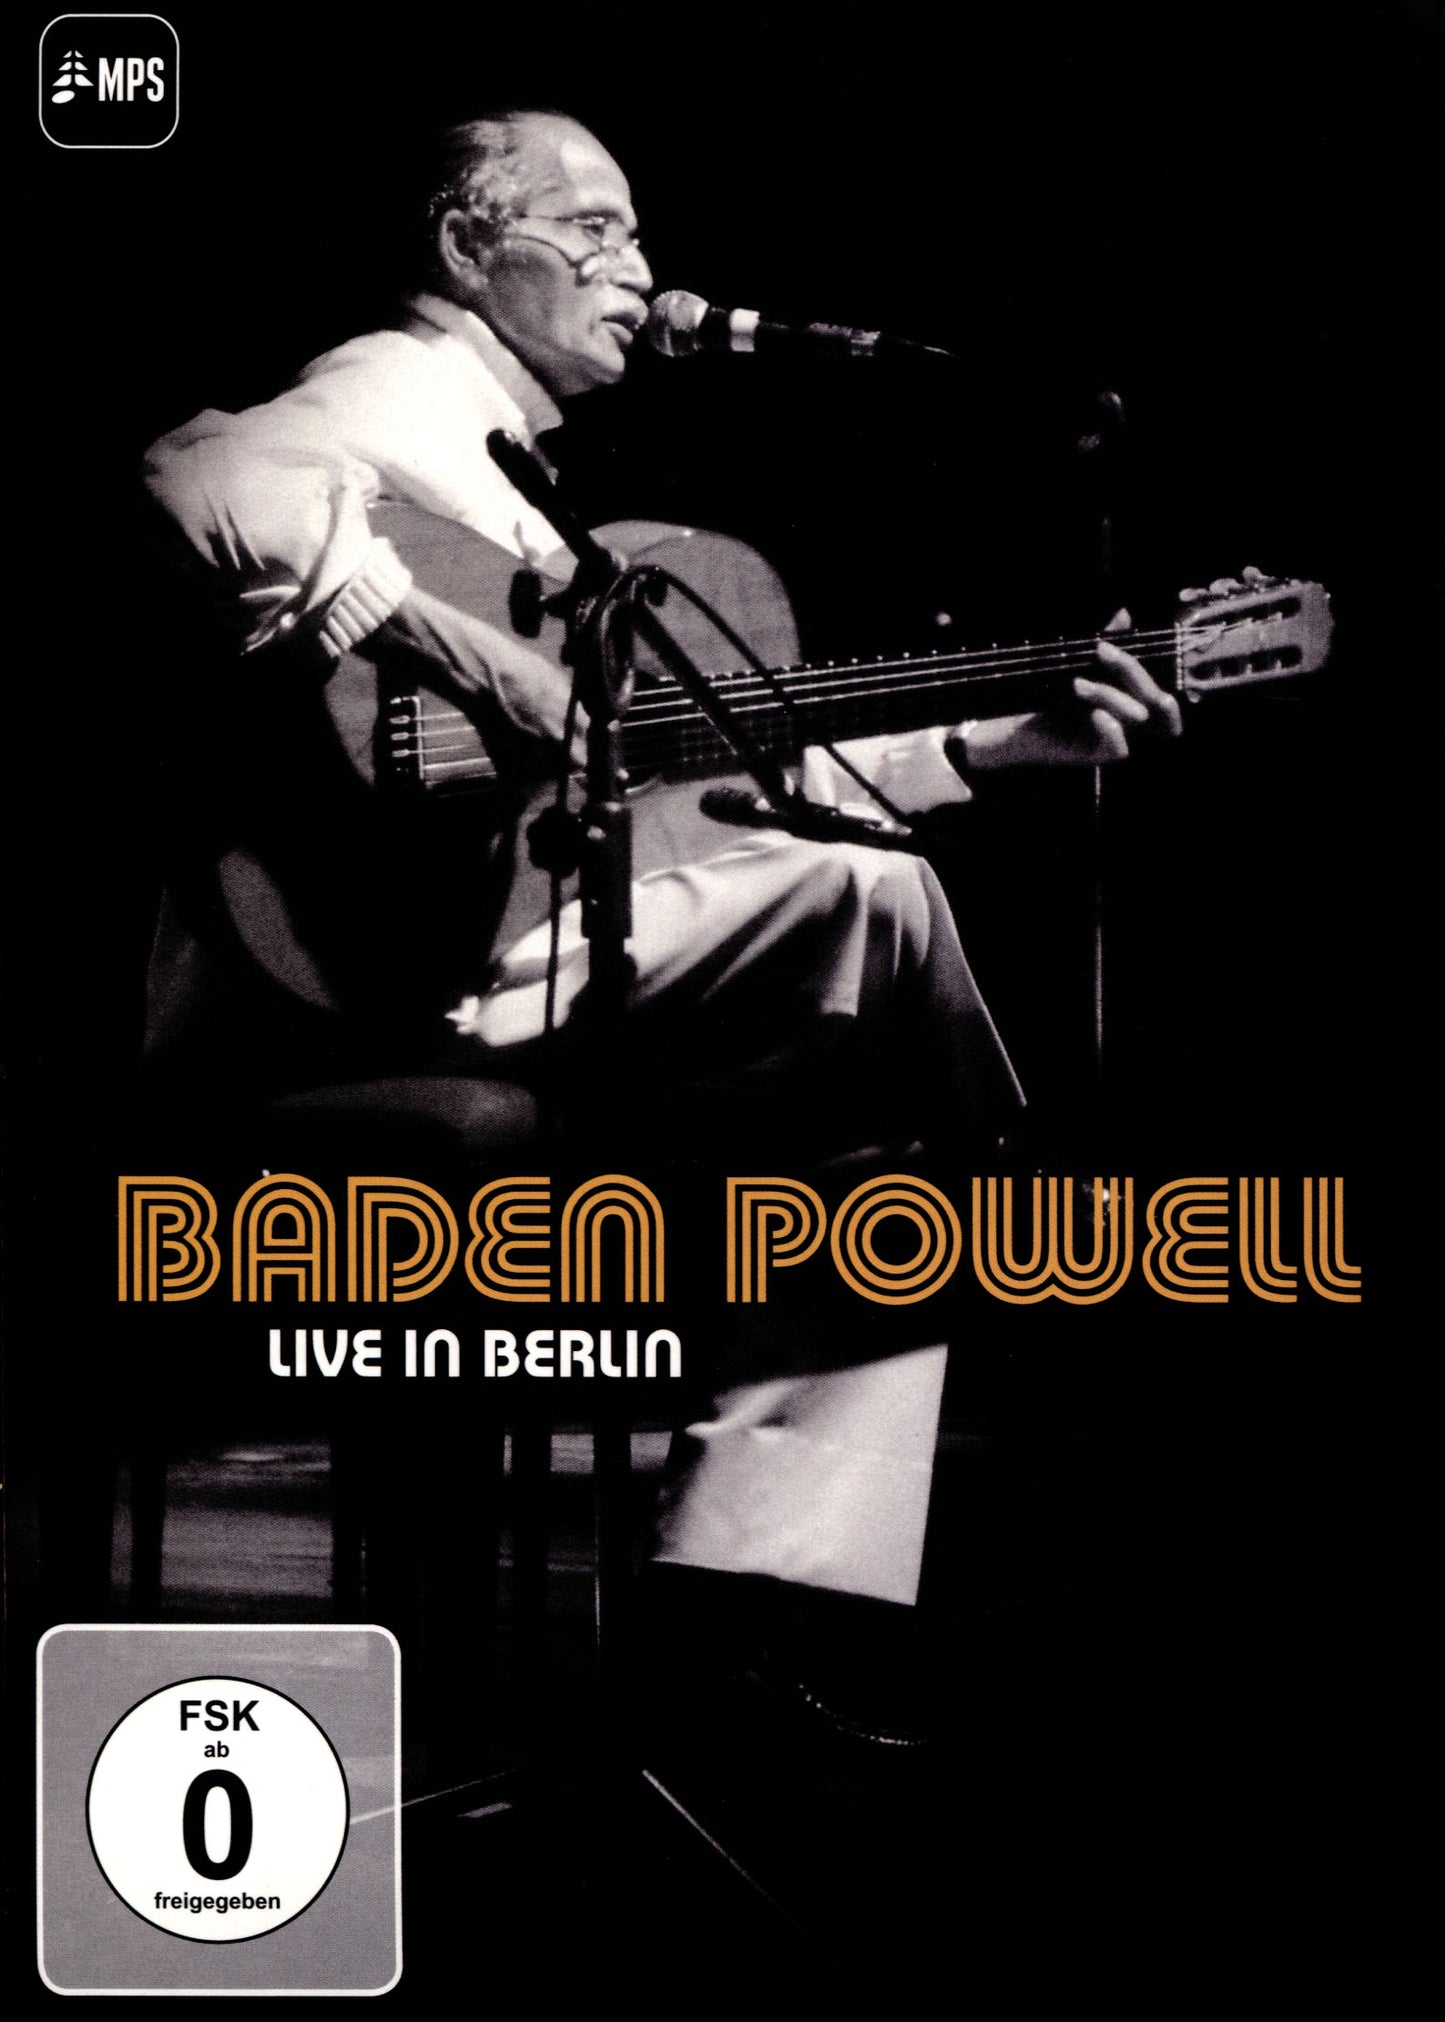 Live in Berlin cover art